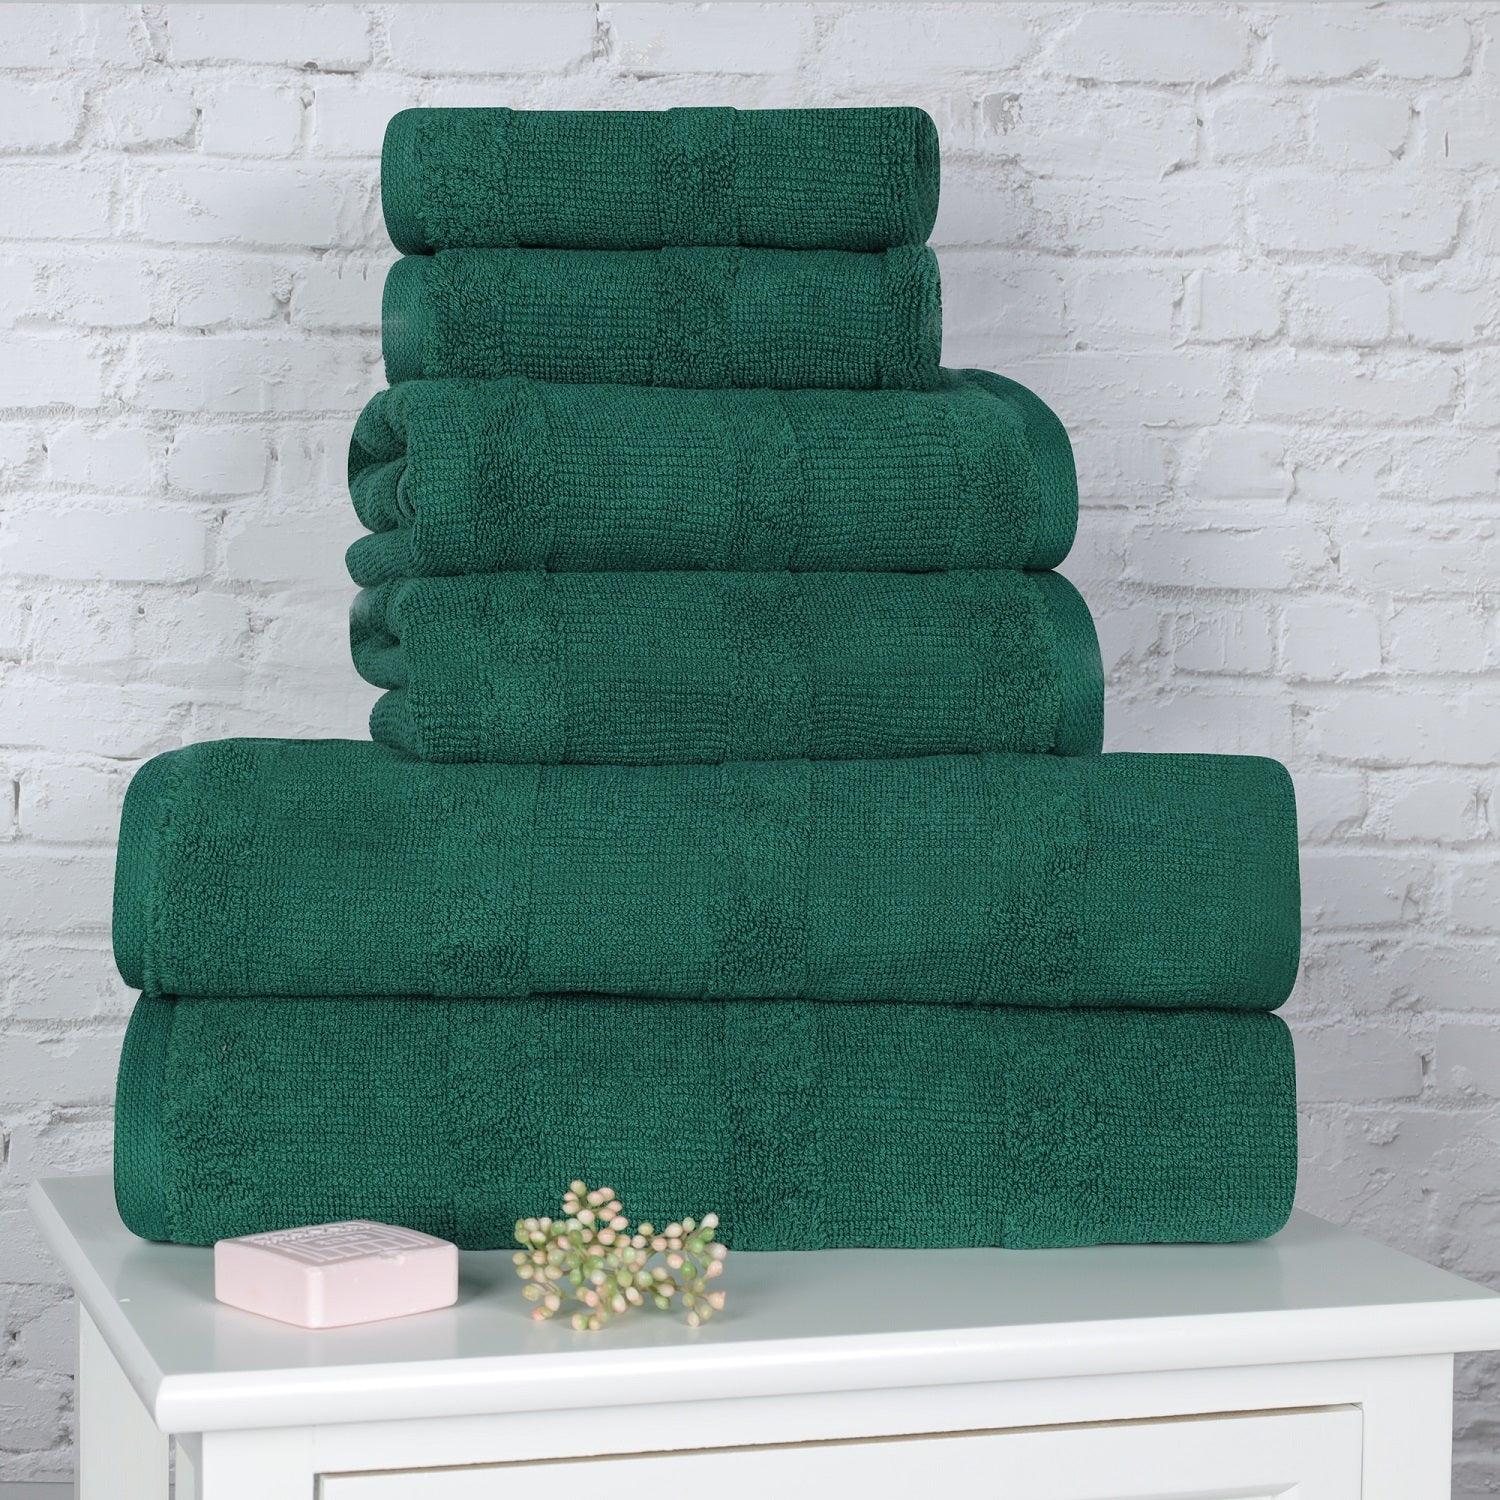 Ribbed Cotton Medium Weight 6 Piece Bath Towel Set -  Evergreen